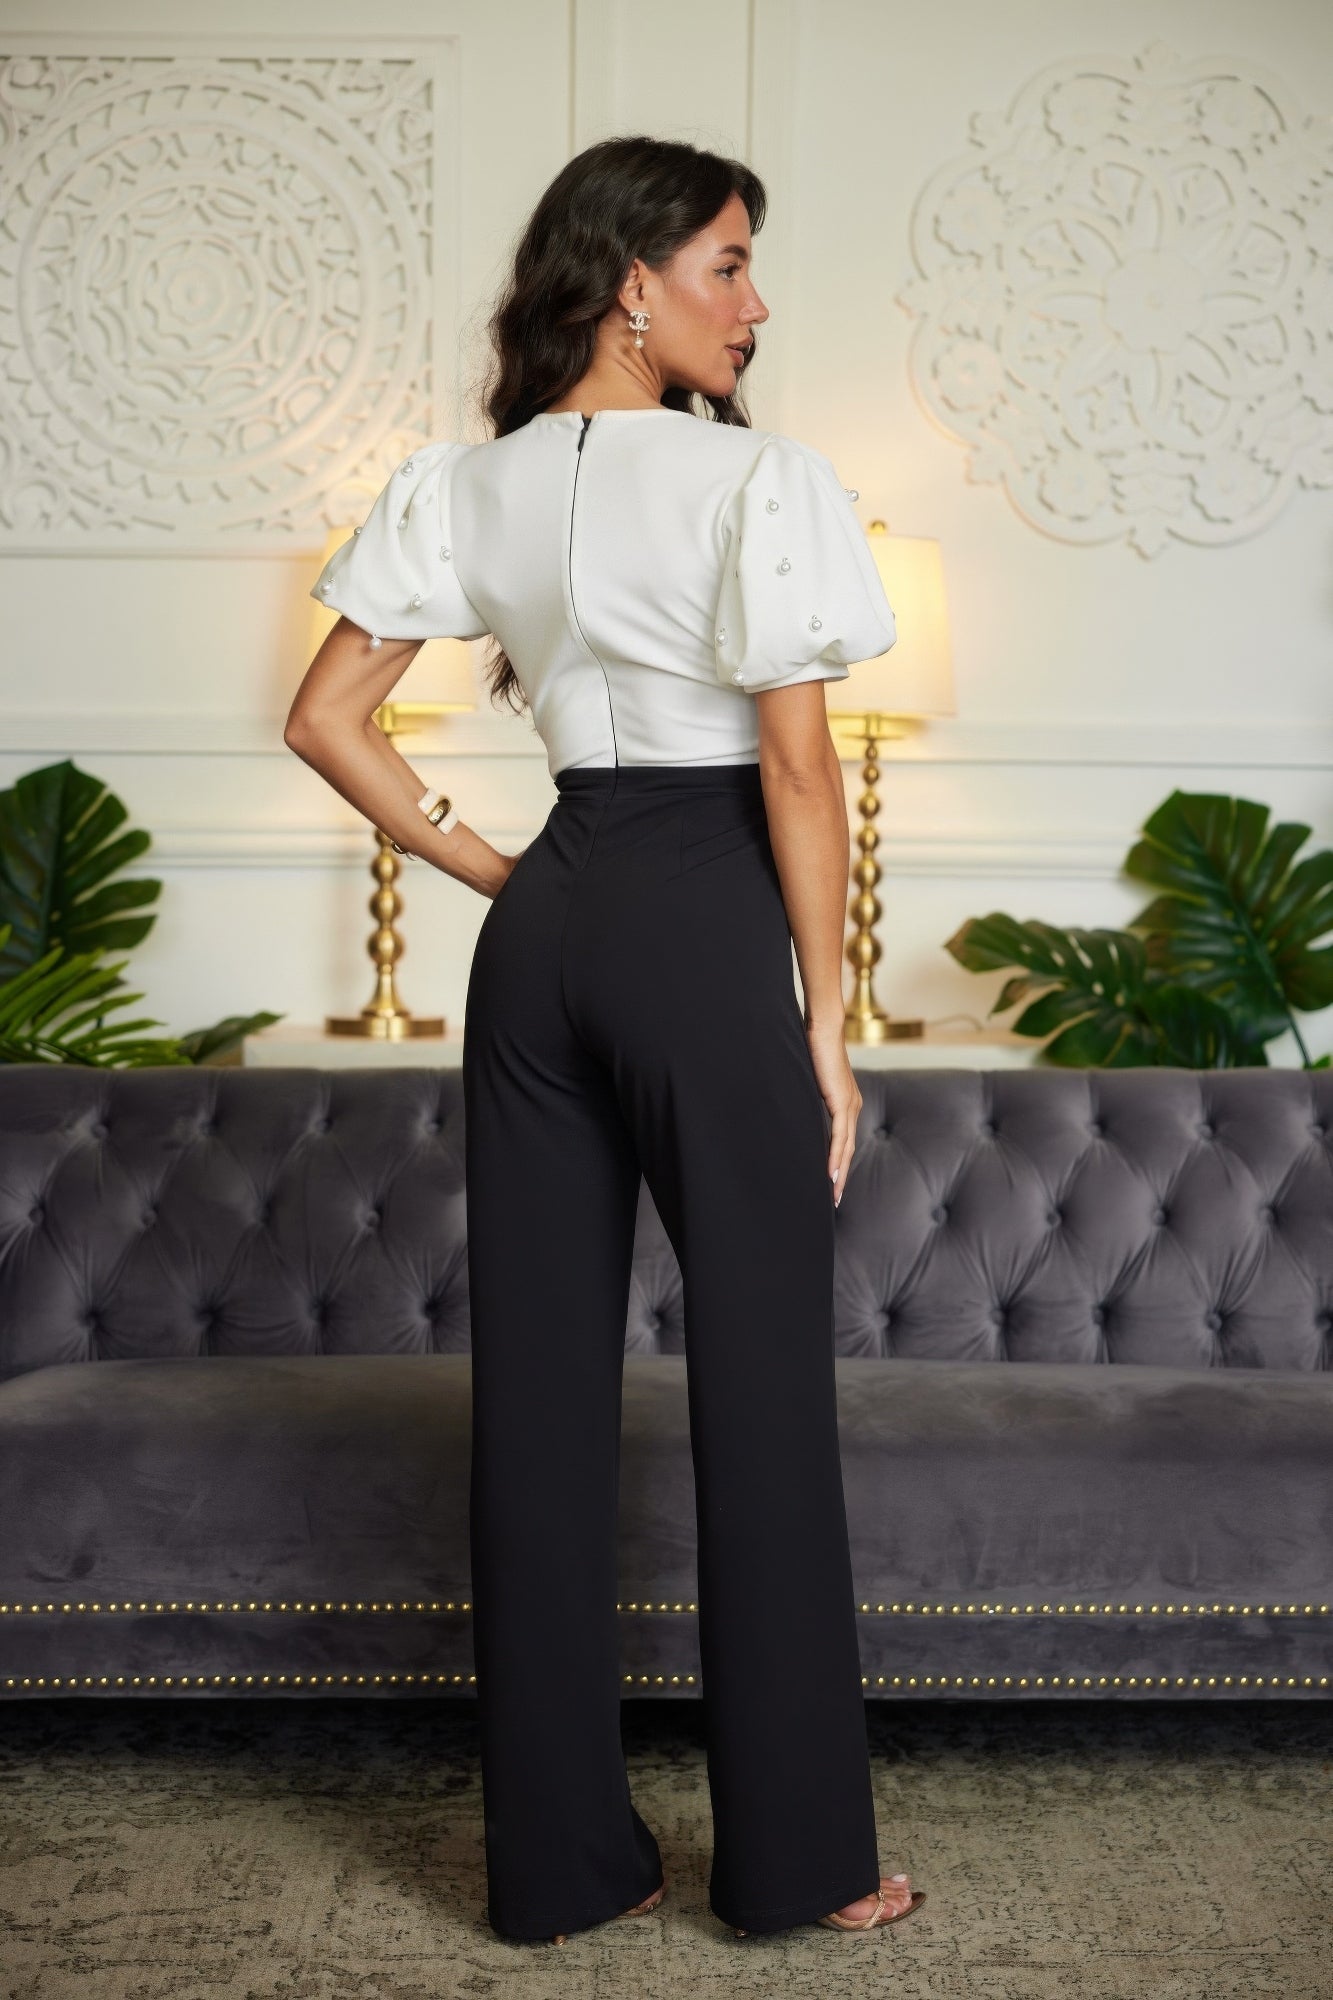 Tonya's Bow & Pearl Detailed Black & White Jumpsuit